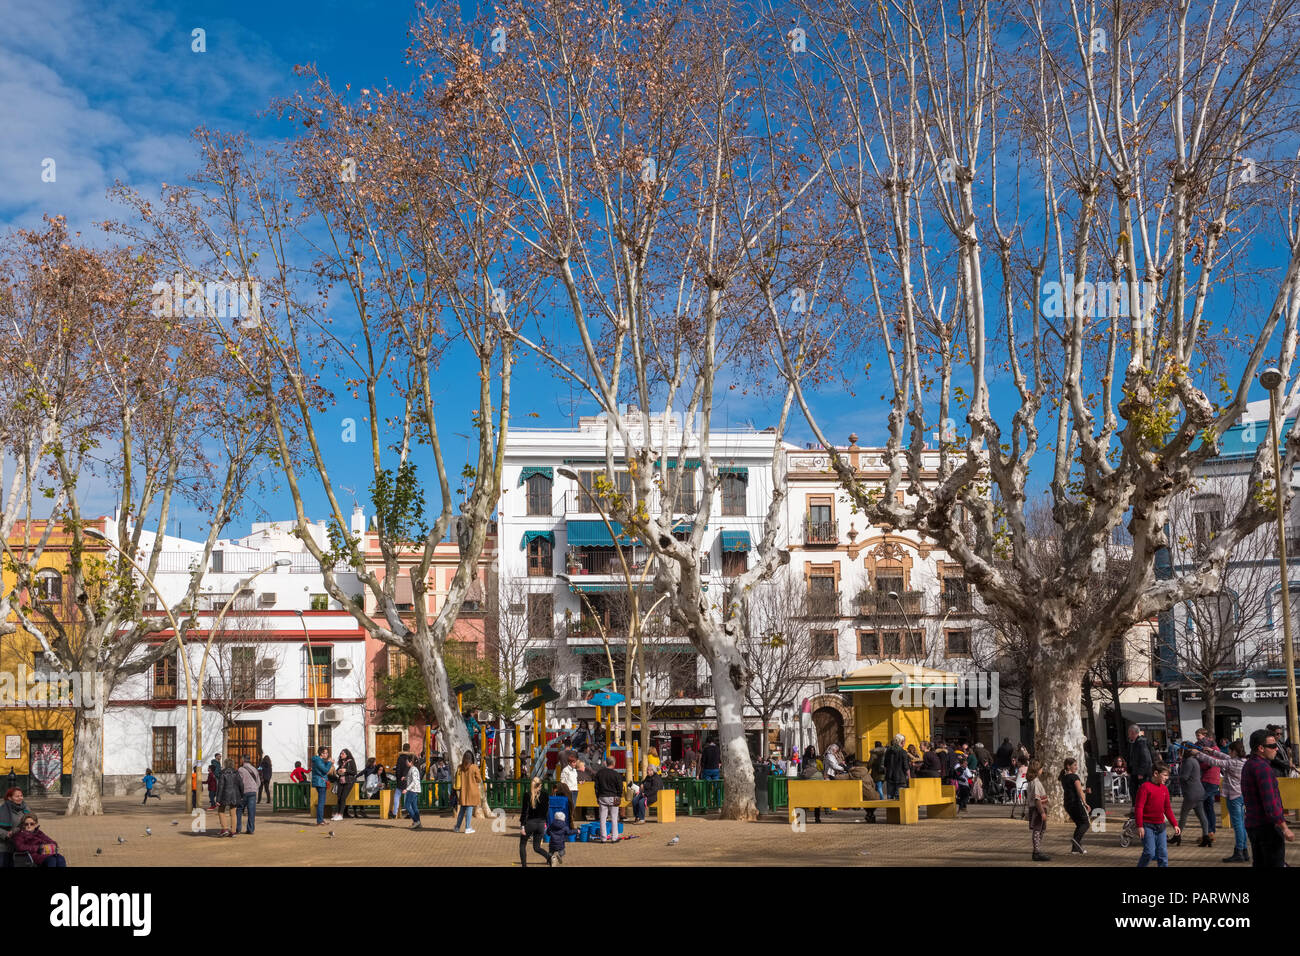 Alameda de Hercules, city square, Seville, Spain, Europe Stock Photo